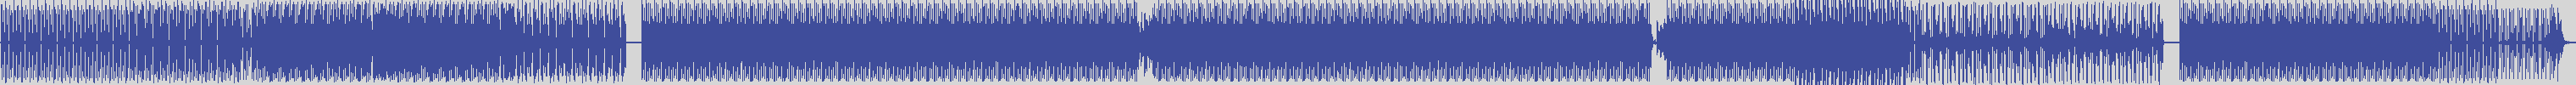 atomic_recordings [AR007] Luca Cassani Present Kristal - Milkshake [Luca Cassani Instrumental  Mix] audio wave form